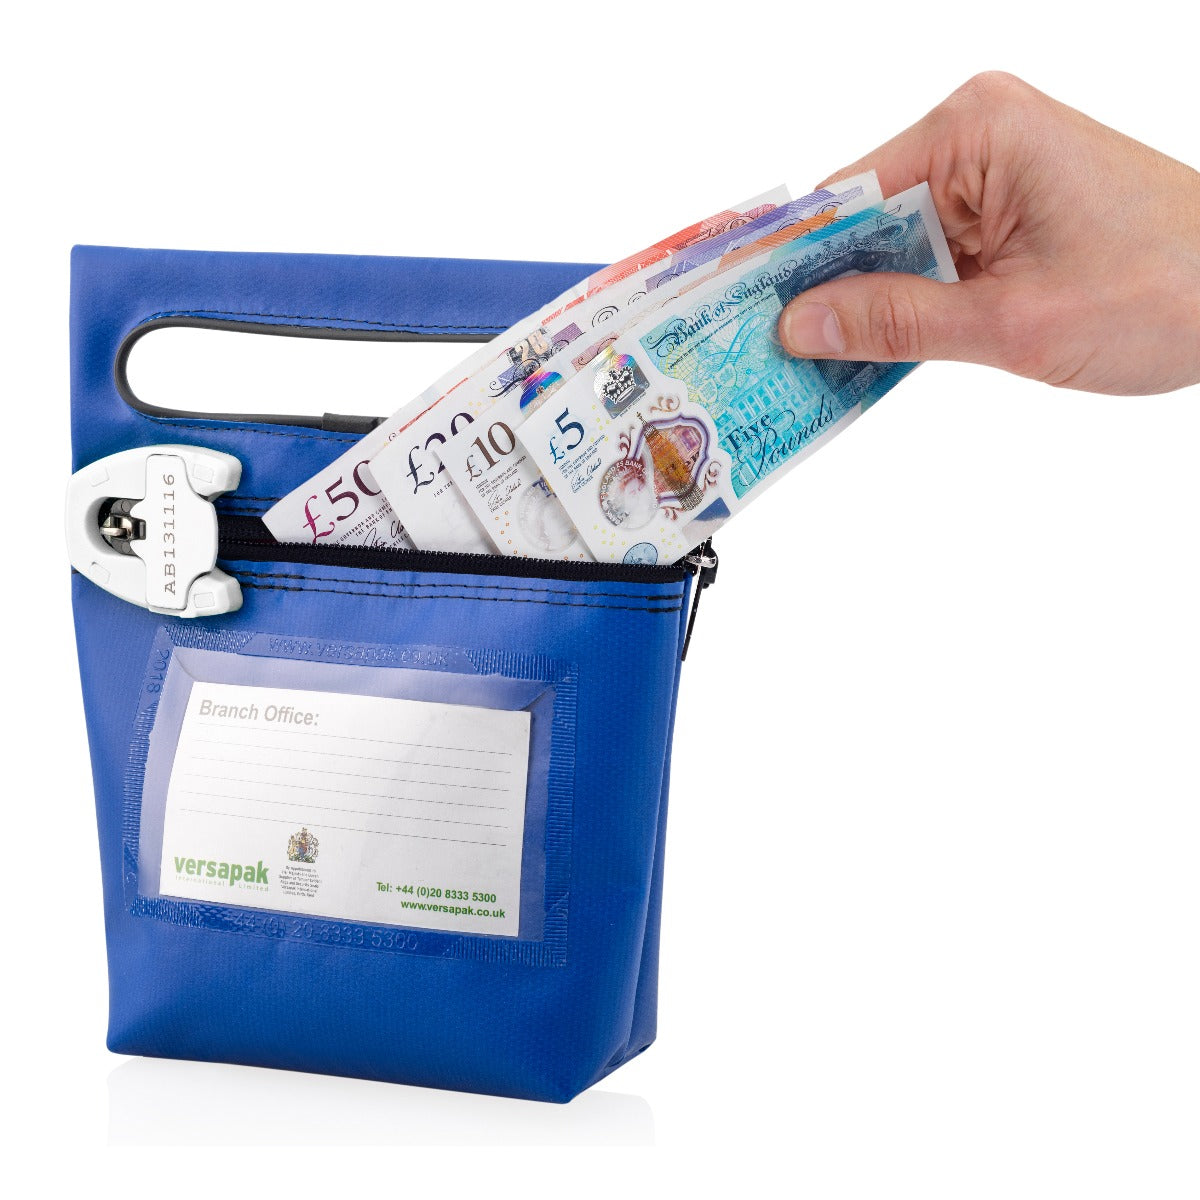 Versapak Secure Reusable Cash Bag - Carry Handle Blue Small in Action